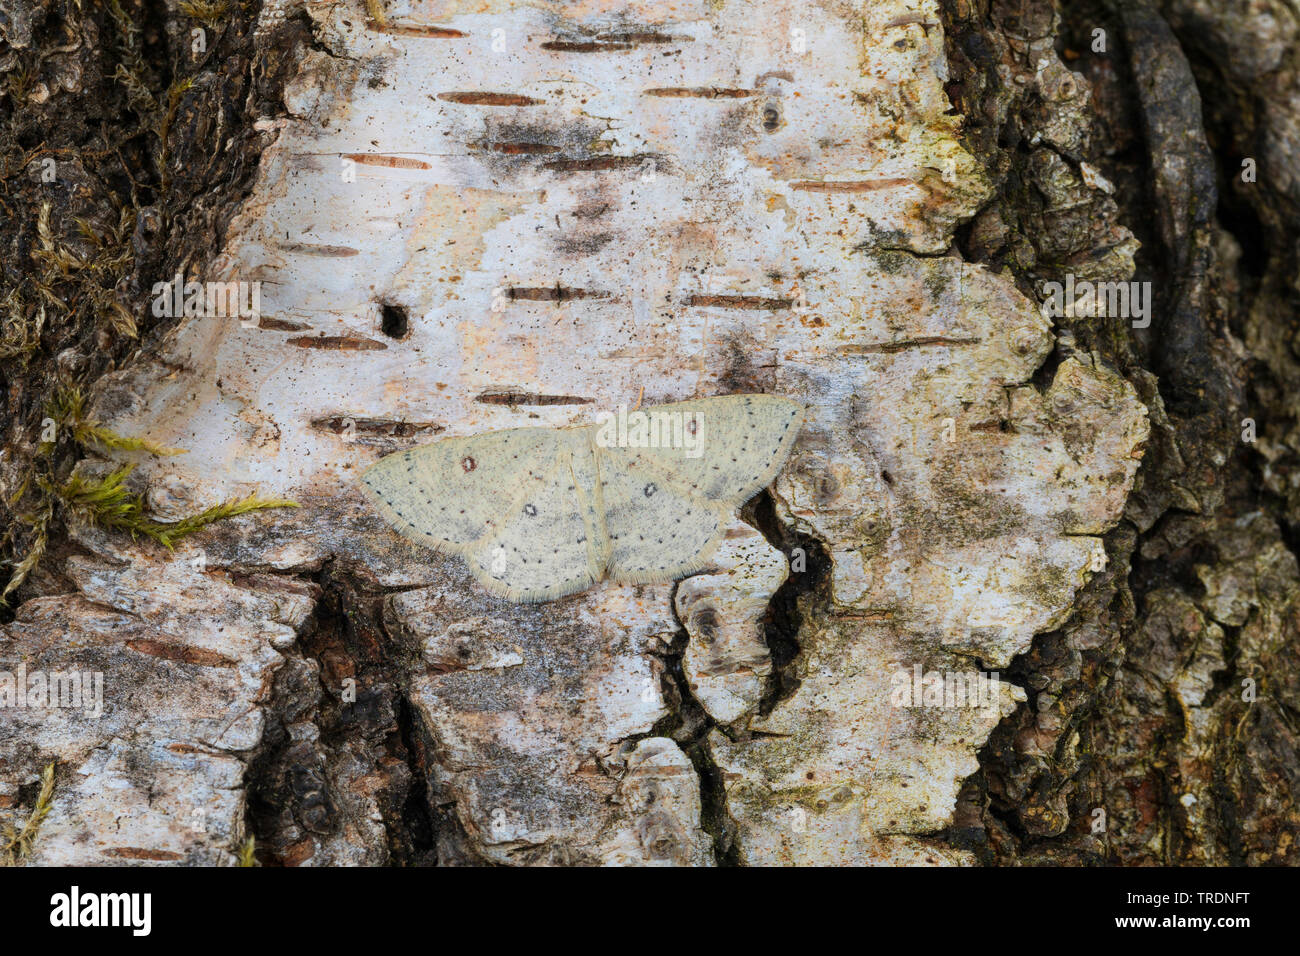 birch mocha (Cyclophora albipunctata), on bark, Germany Stock Photo